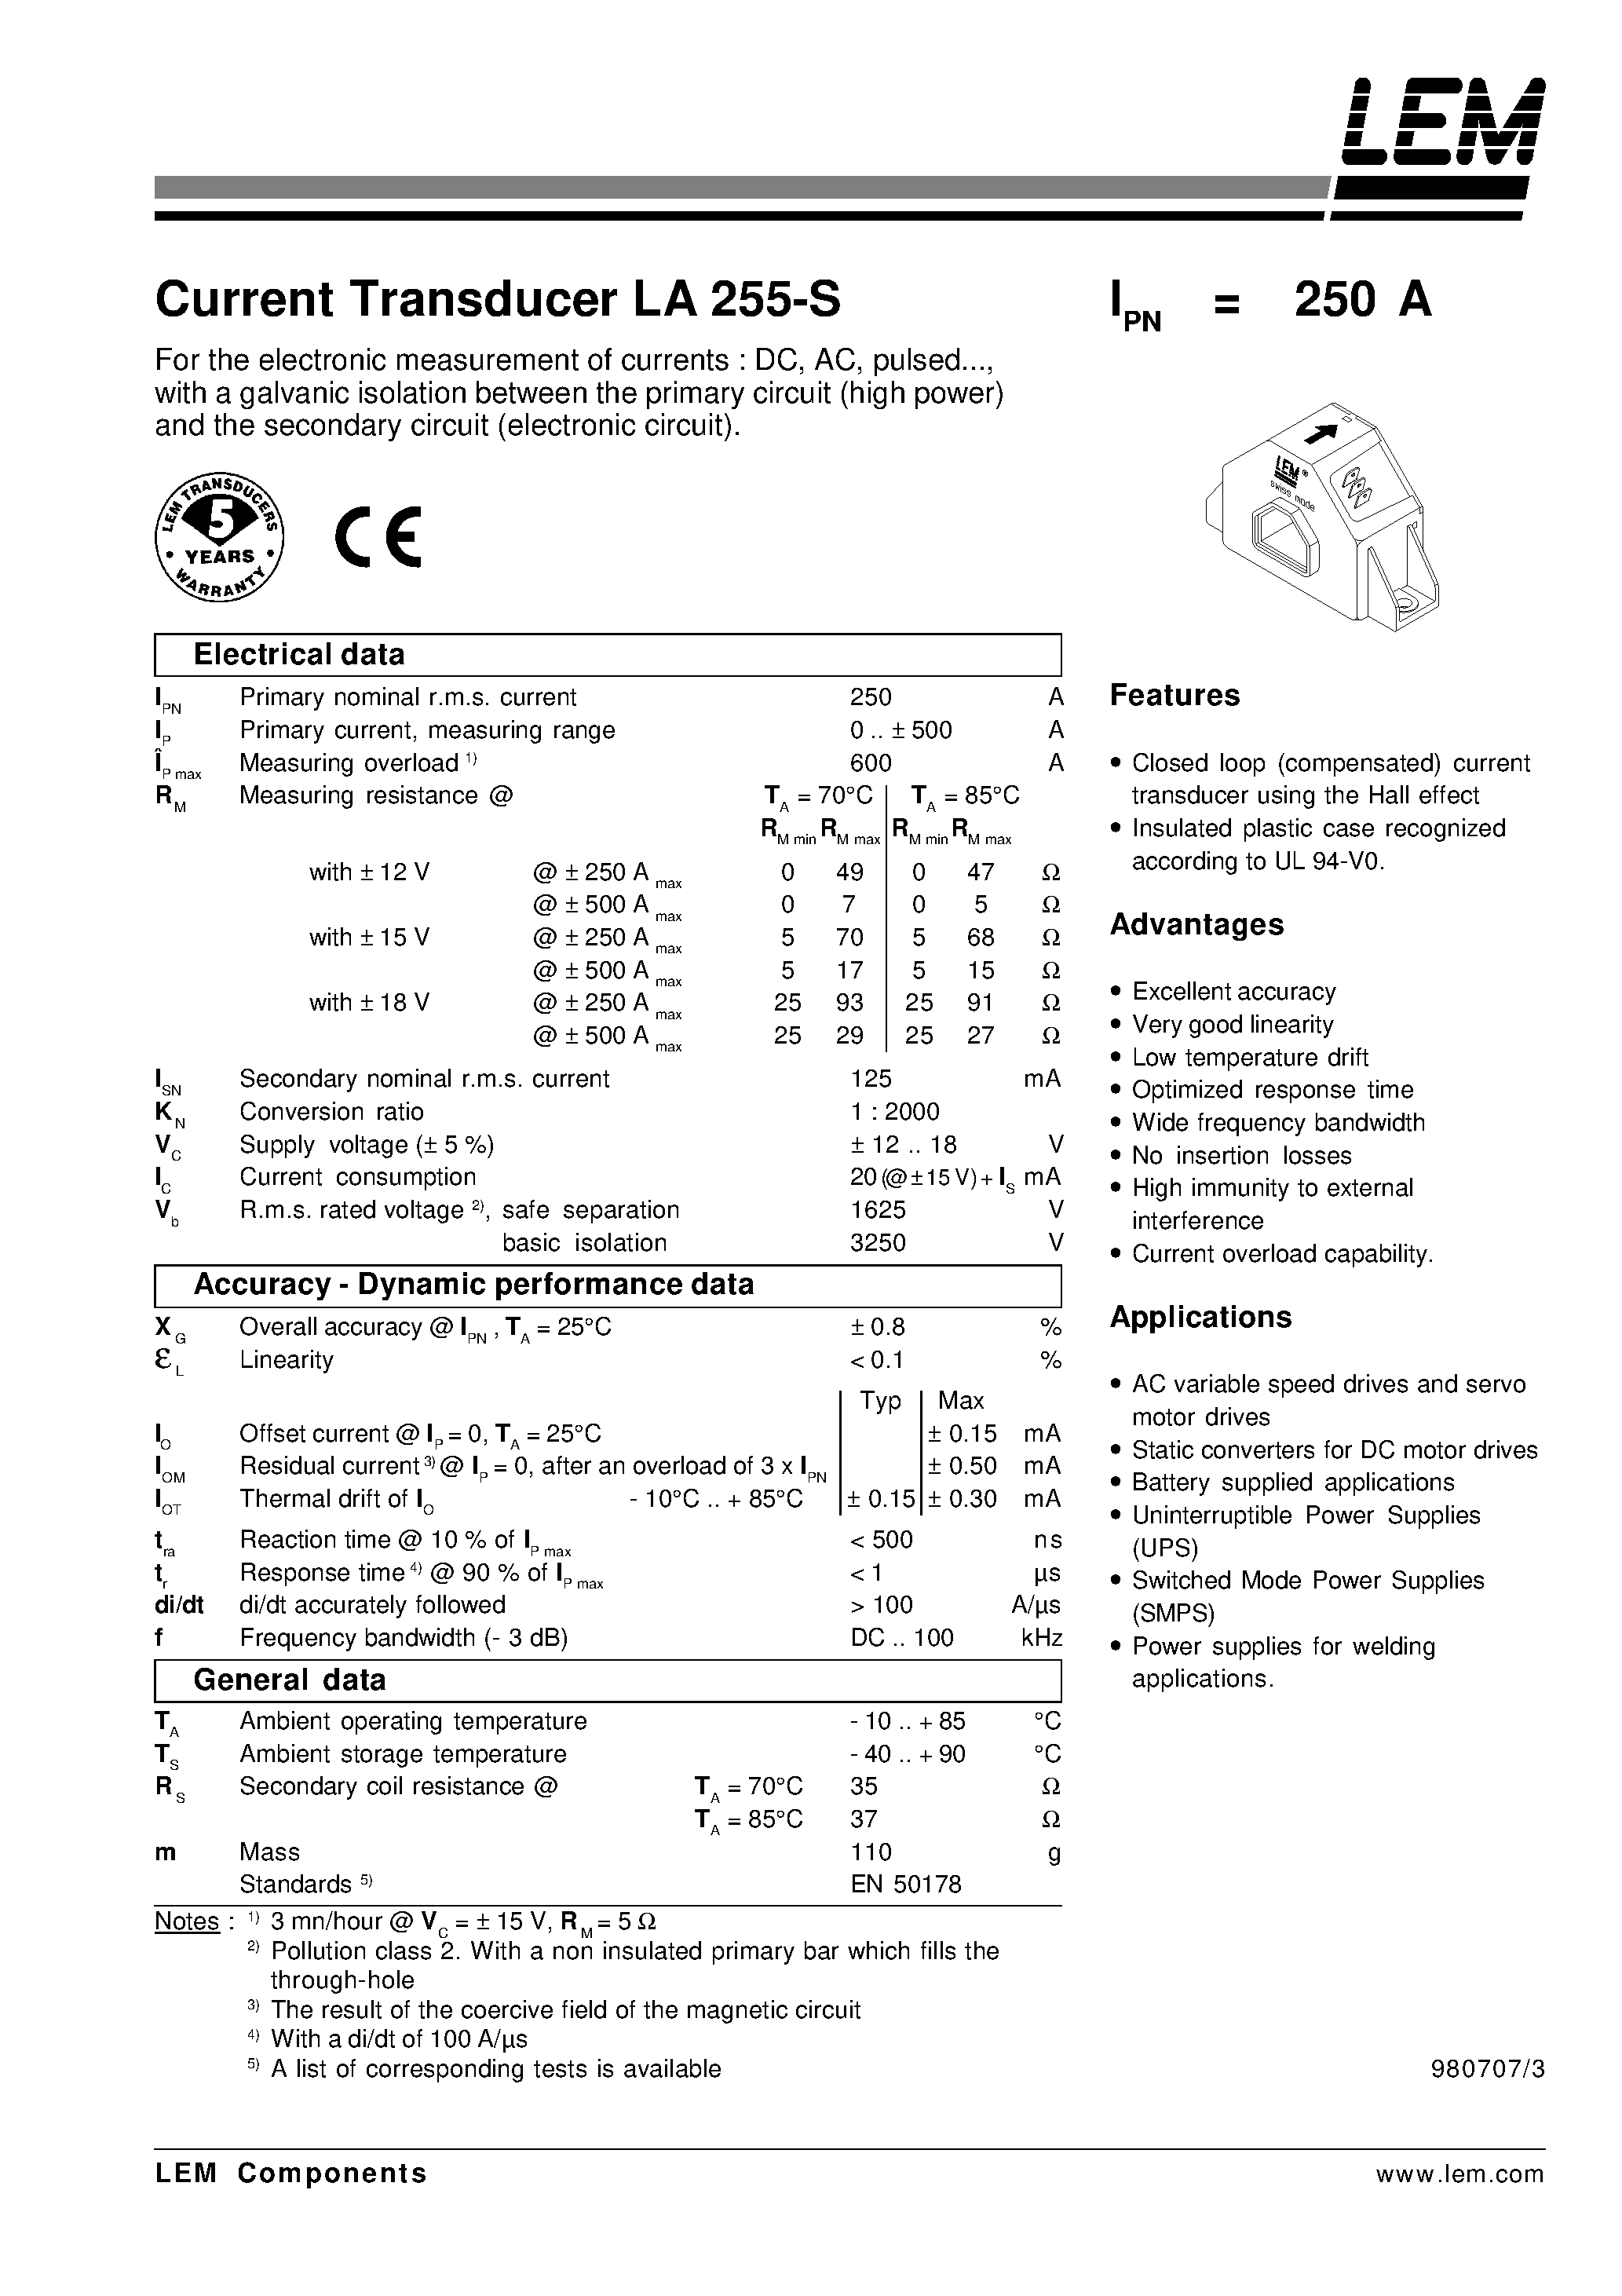 Datasheet LA255-S - Current Transducer LA 255-S page 1